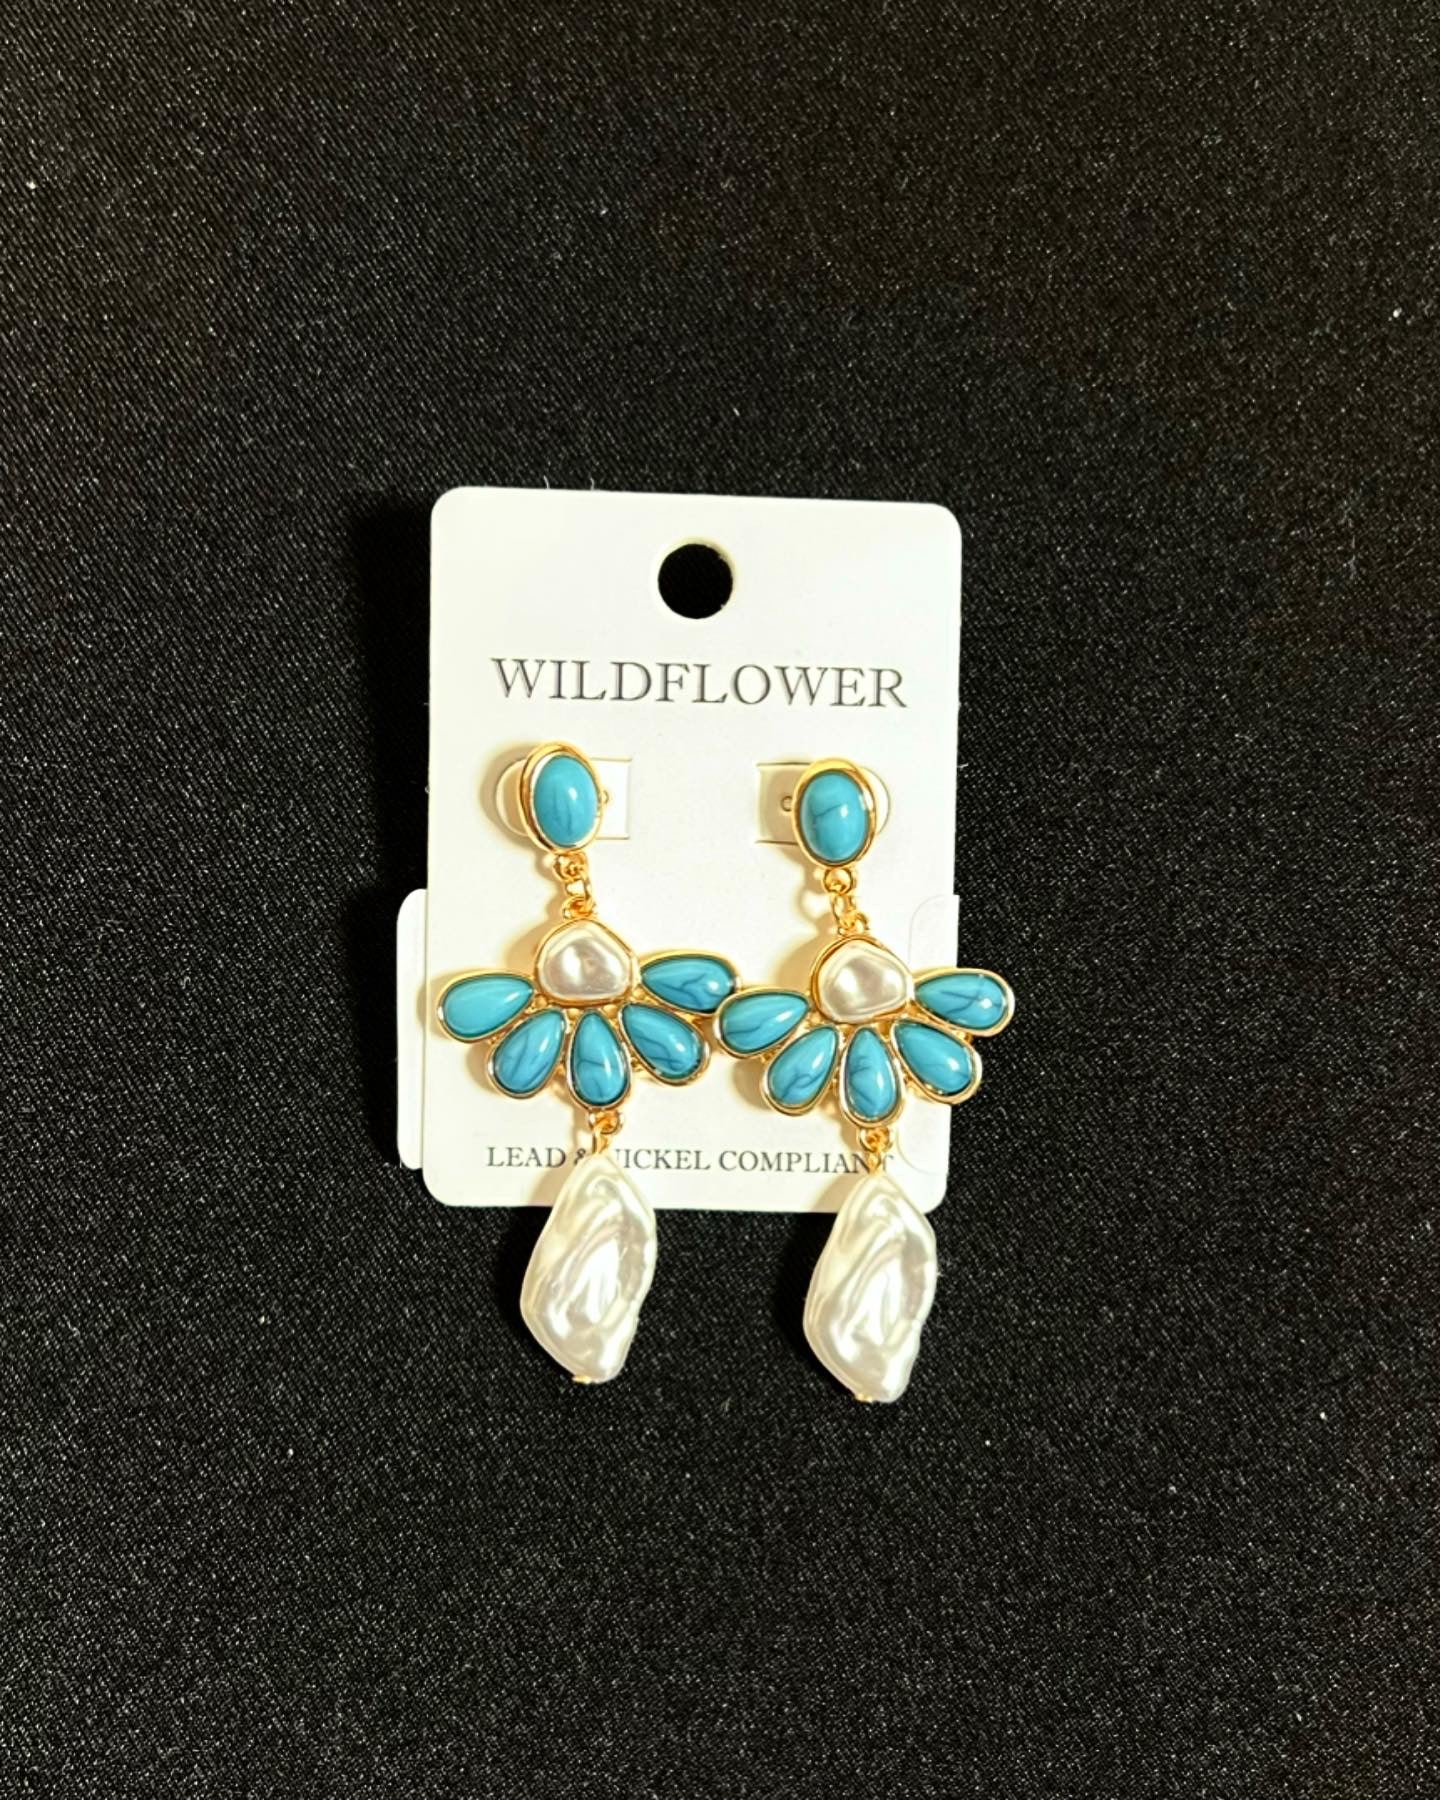 Floral Pearl Turquoise Drop Earrings